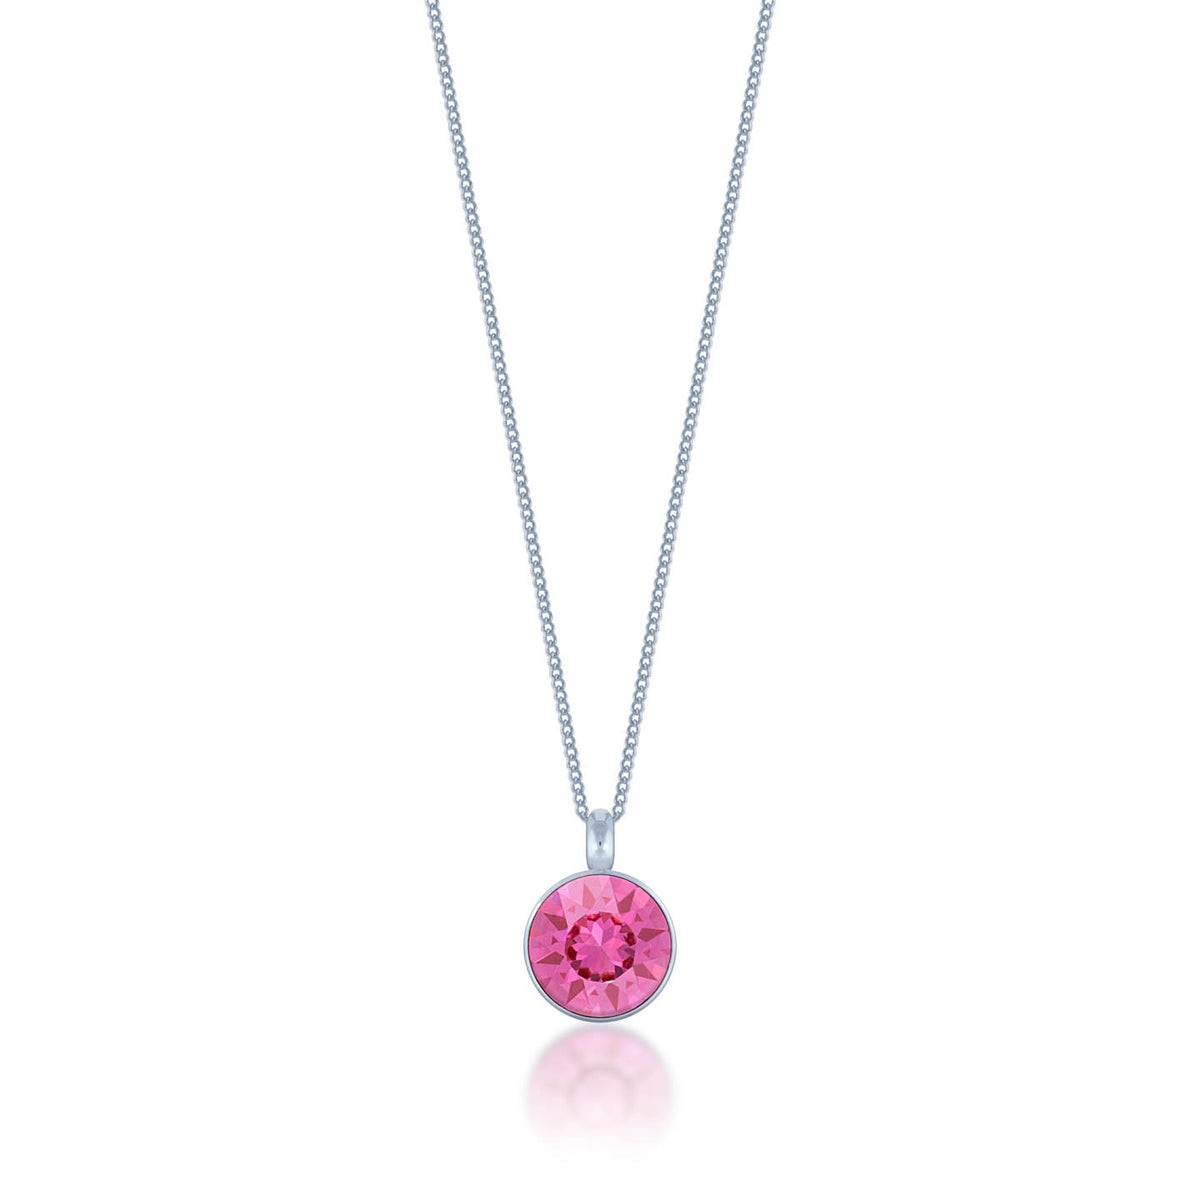 Tiffany's Soleste Pink Diamond Pendant